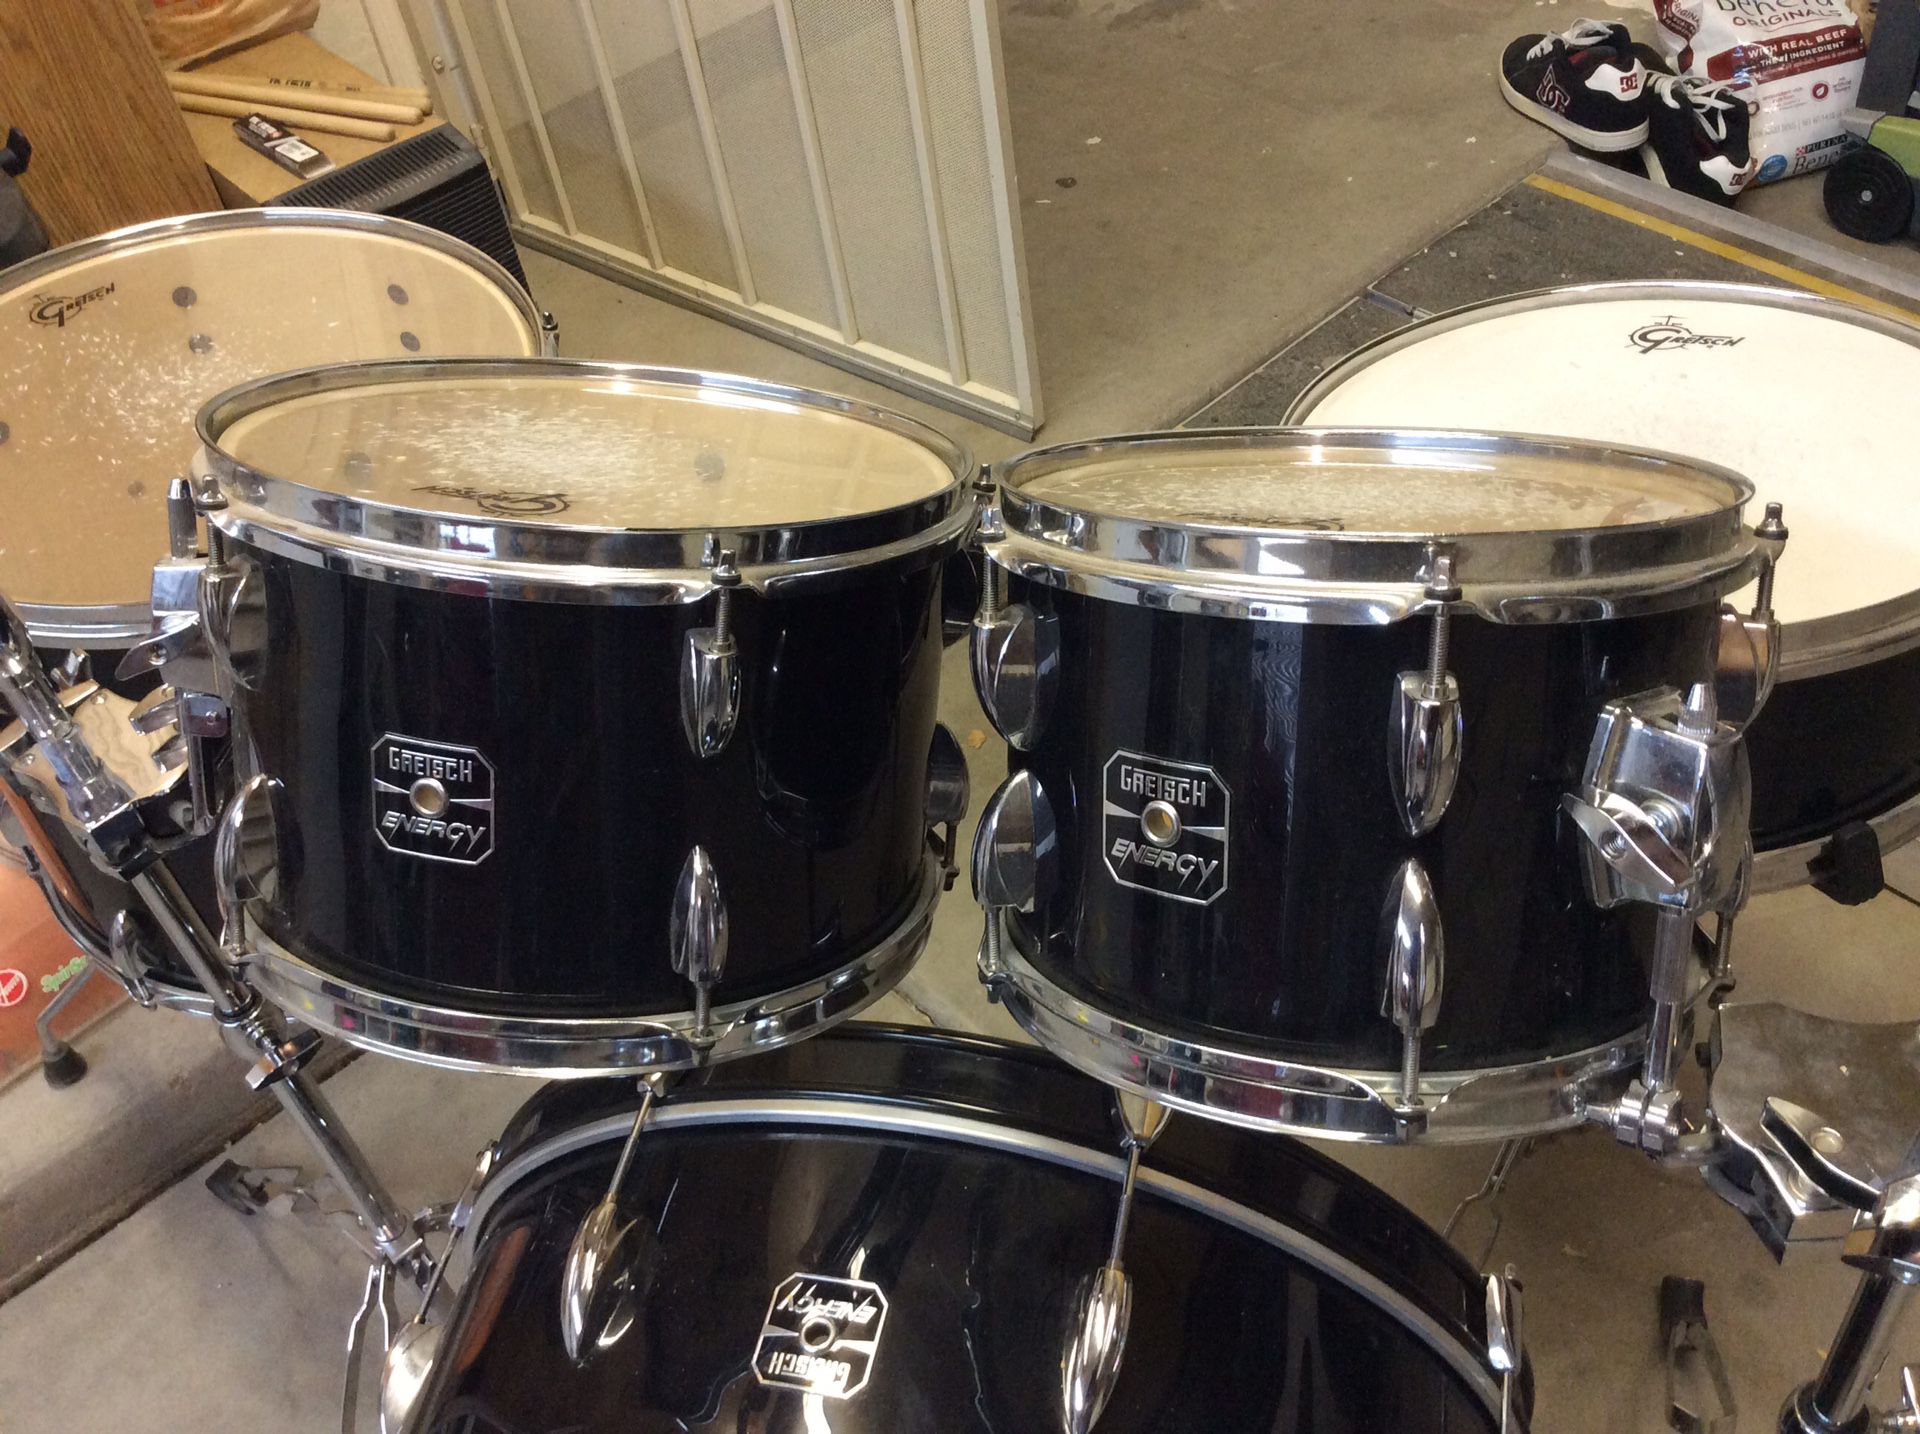 Gretsch complete drums set